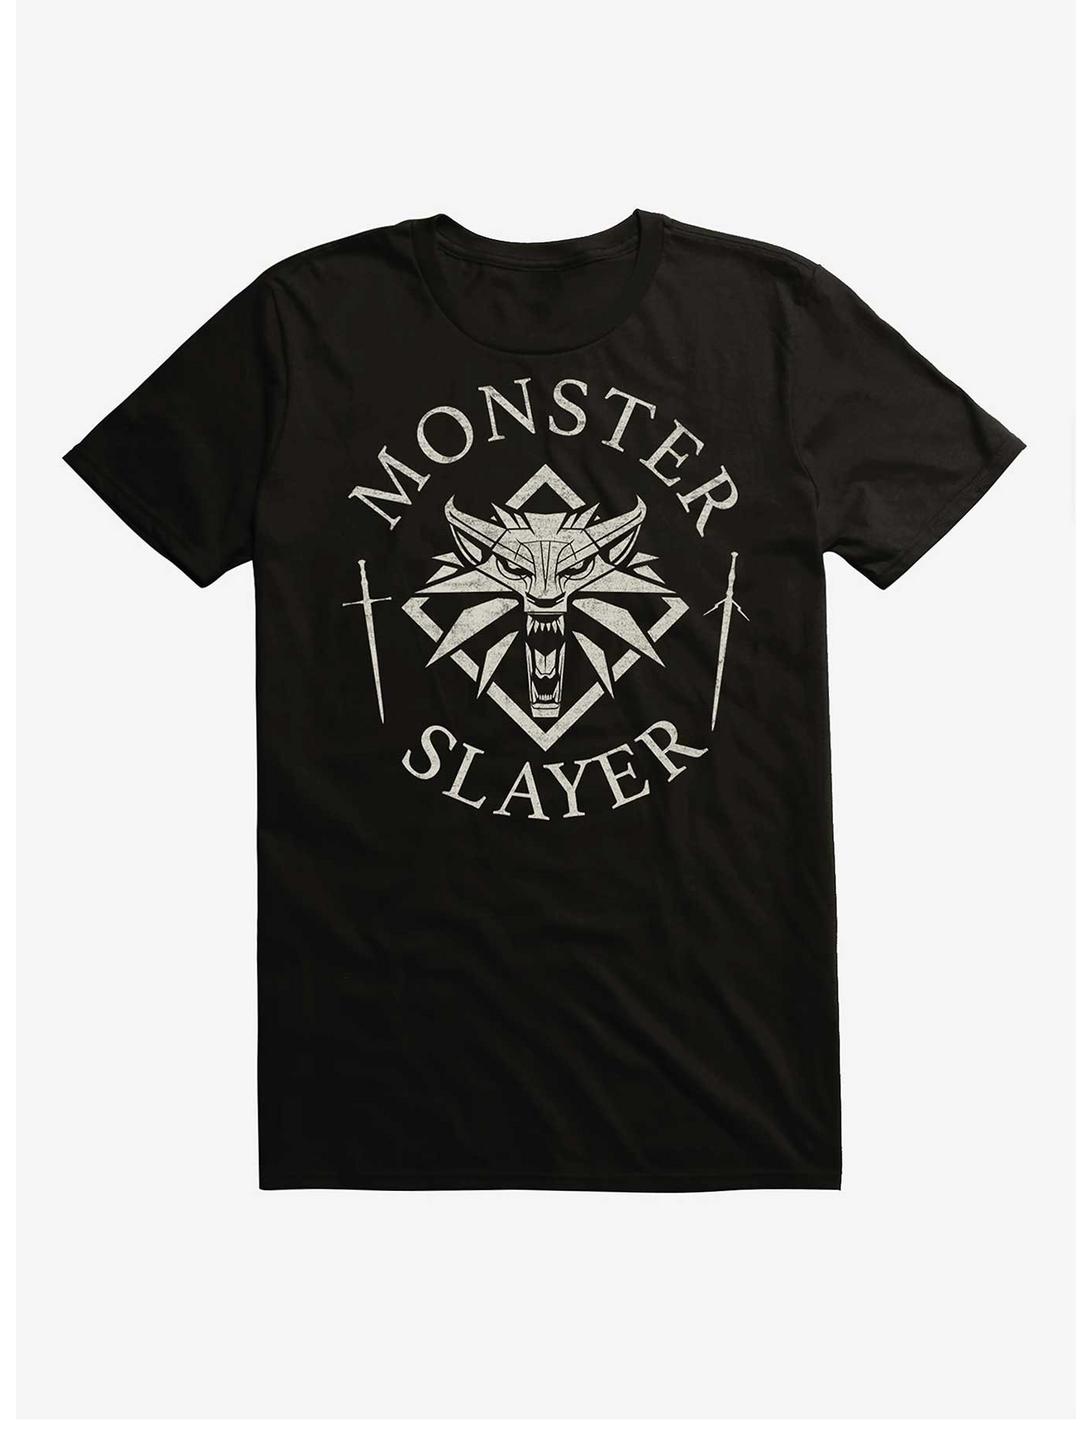 The Witcher 3: Wild Hunt Monster Slayer Wolf Symbol Layout T-Shirt, BLACK, hi-res